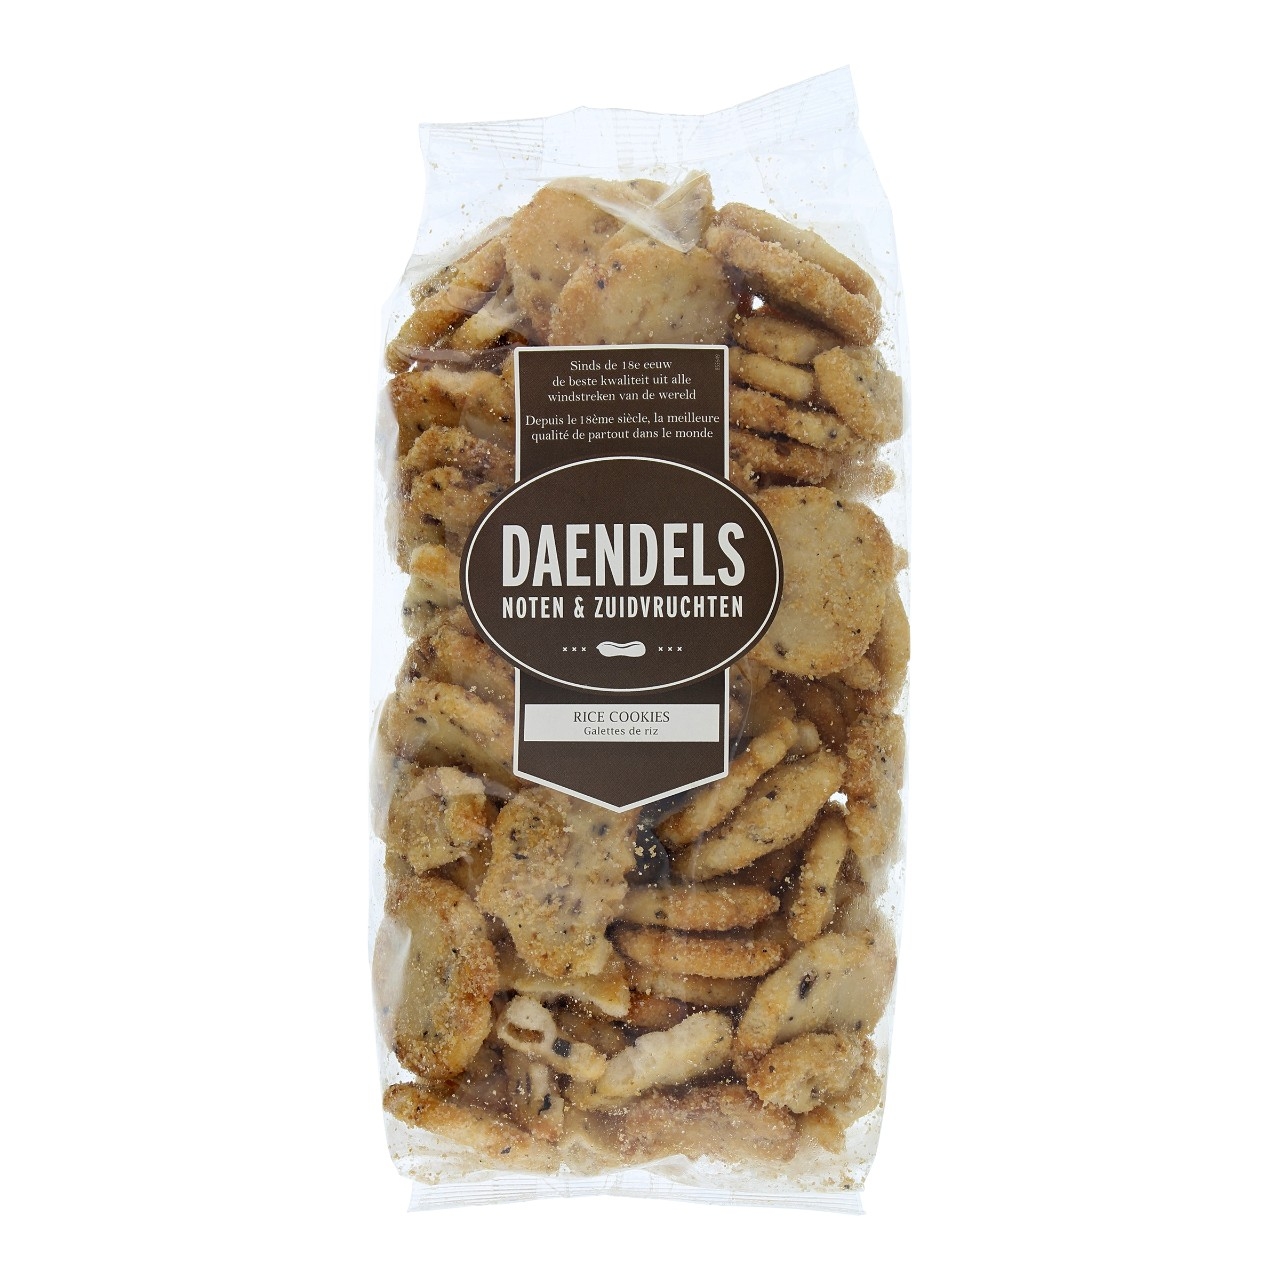 Daendels rice cookies 350 gram